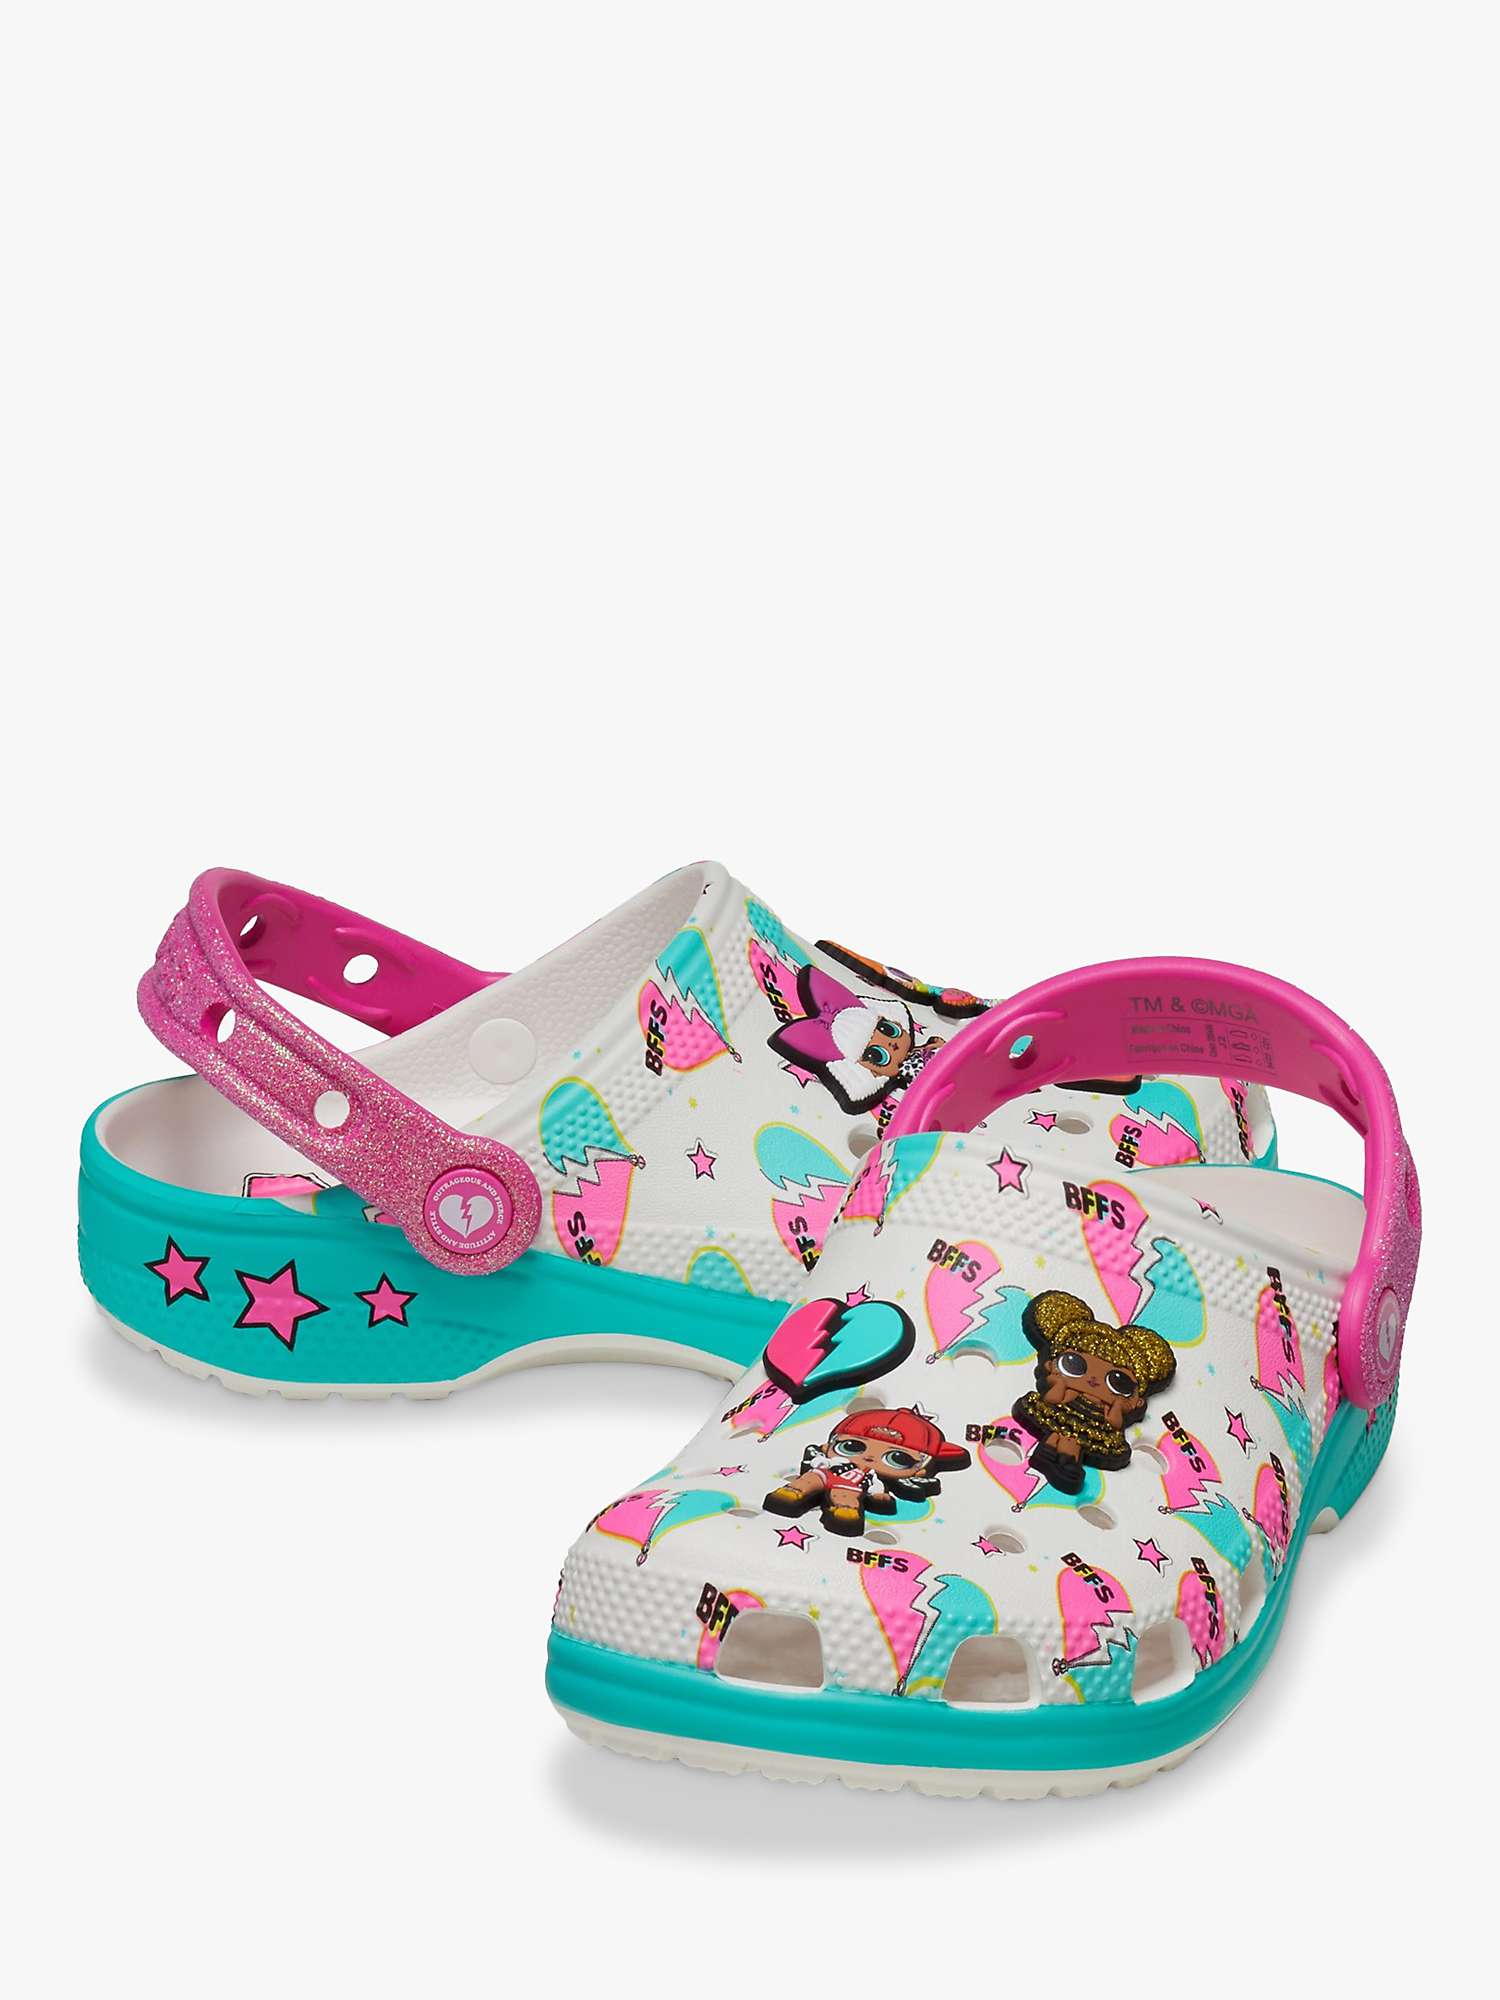 Buy Crocs Kids' Crocs X LOL Surprise! BFF Clogs, White/Multi Online at johnlewis.com